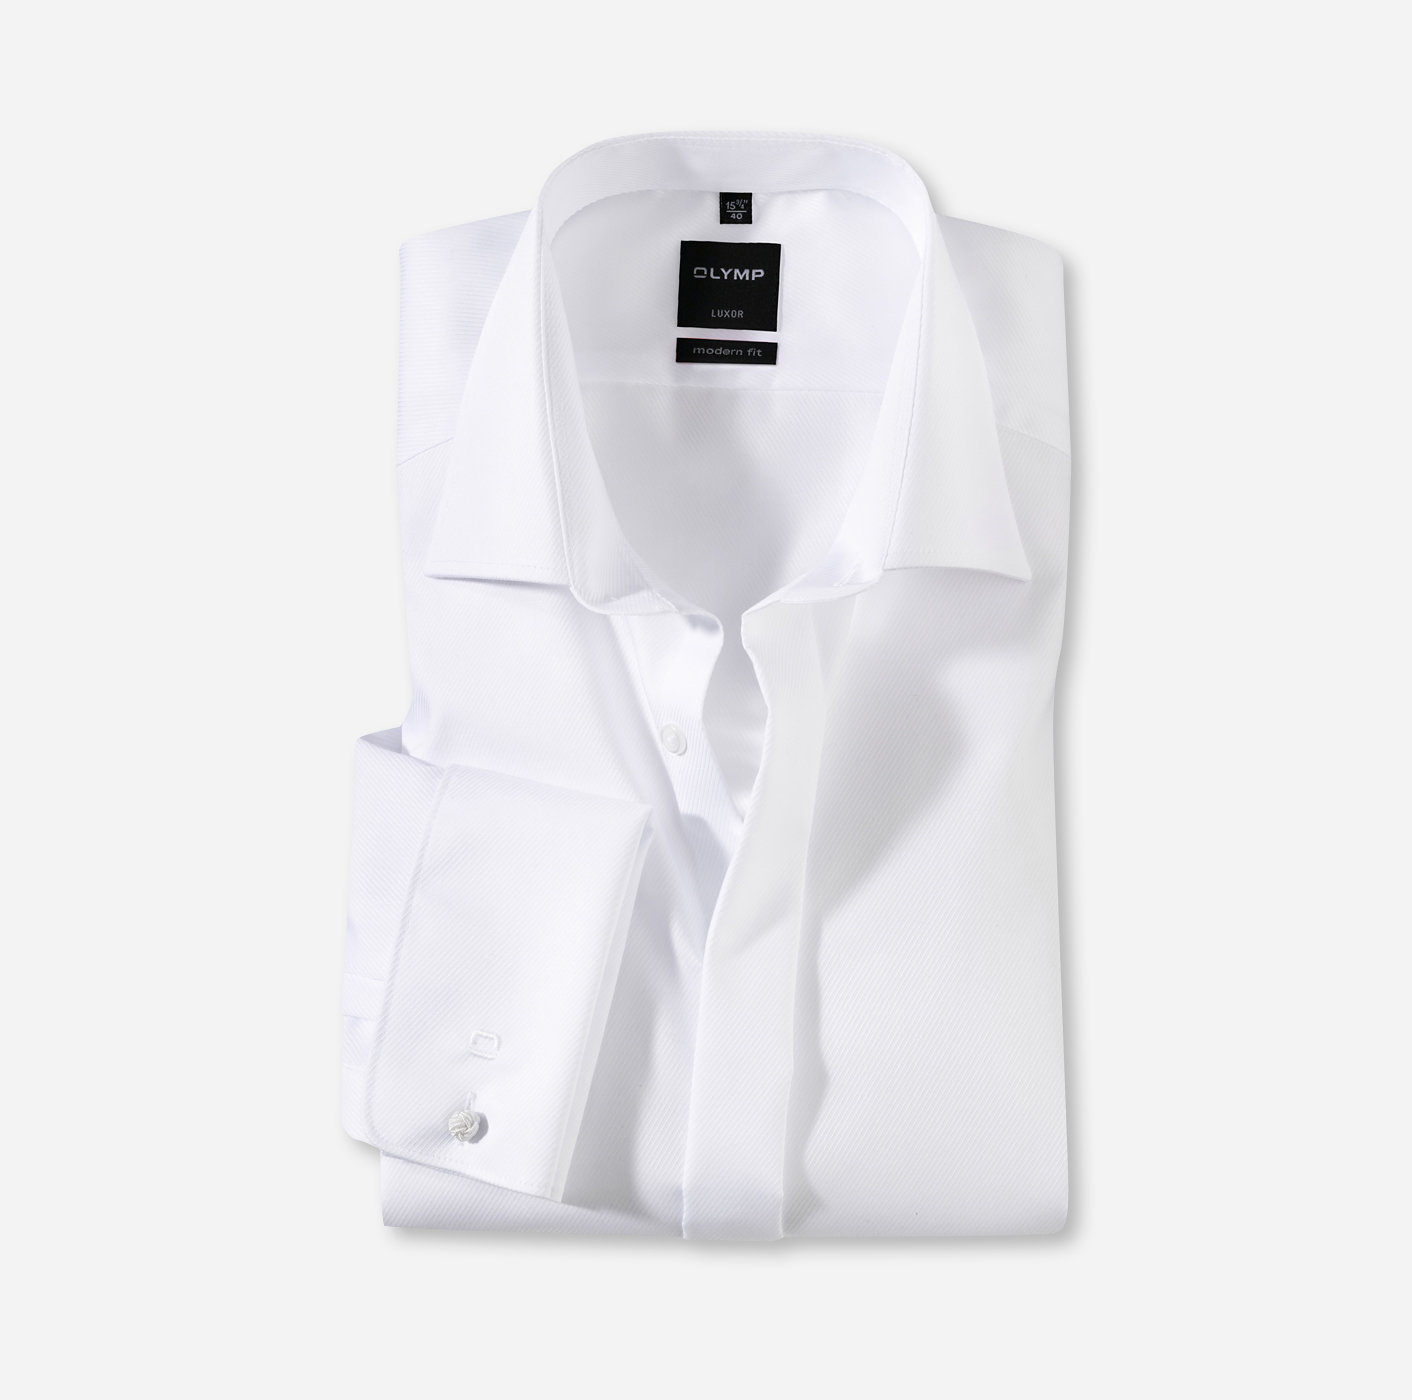 OLYMP Luxor, modern fit, Business shirt, New Kent, Blanc